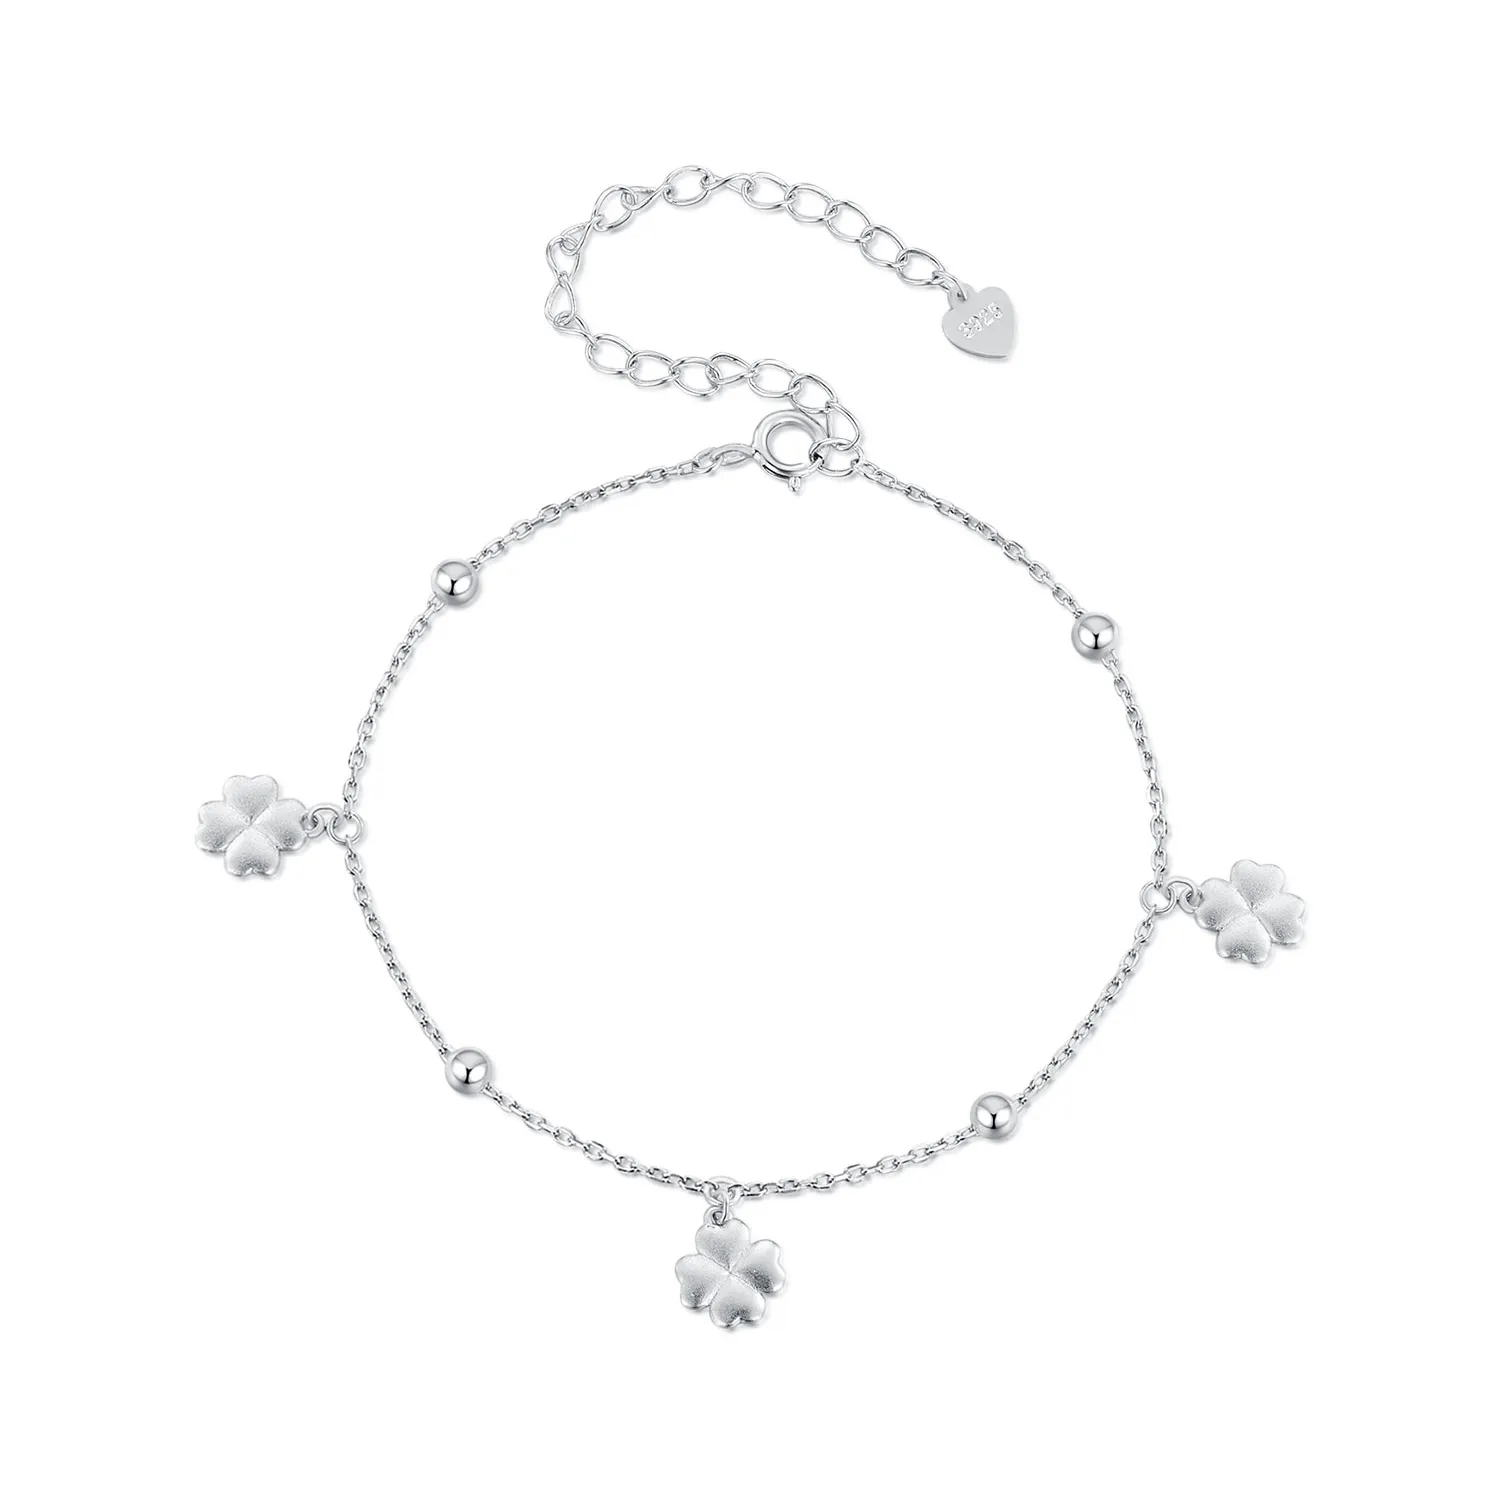 Pandora Style Four Leaf Clover Chain Bracelet - BSB139